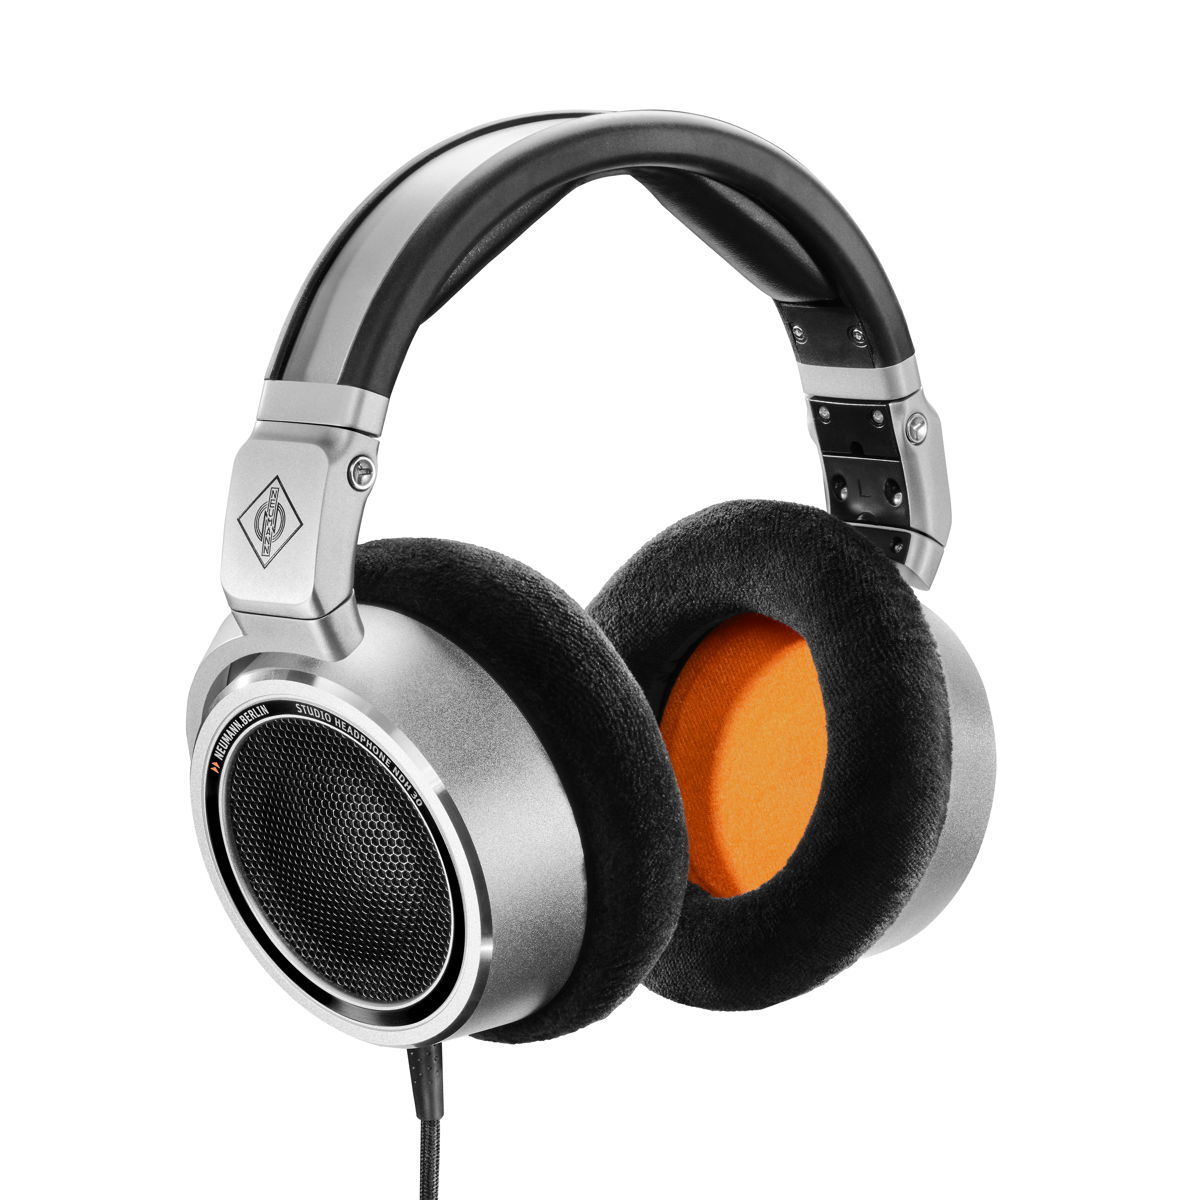 The new Neumann NDH 30 open studio headphone